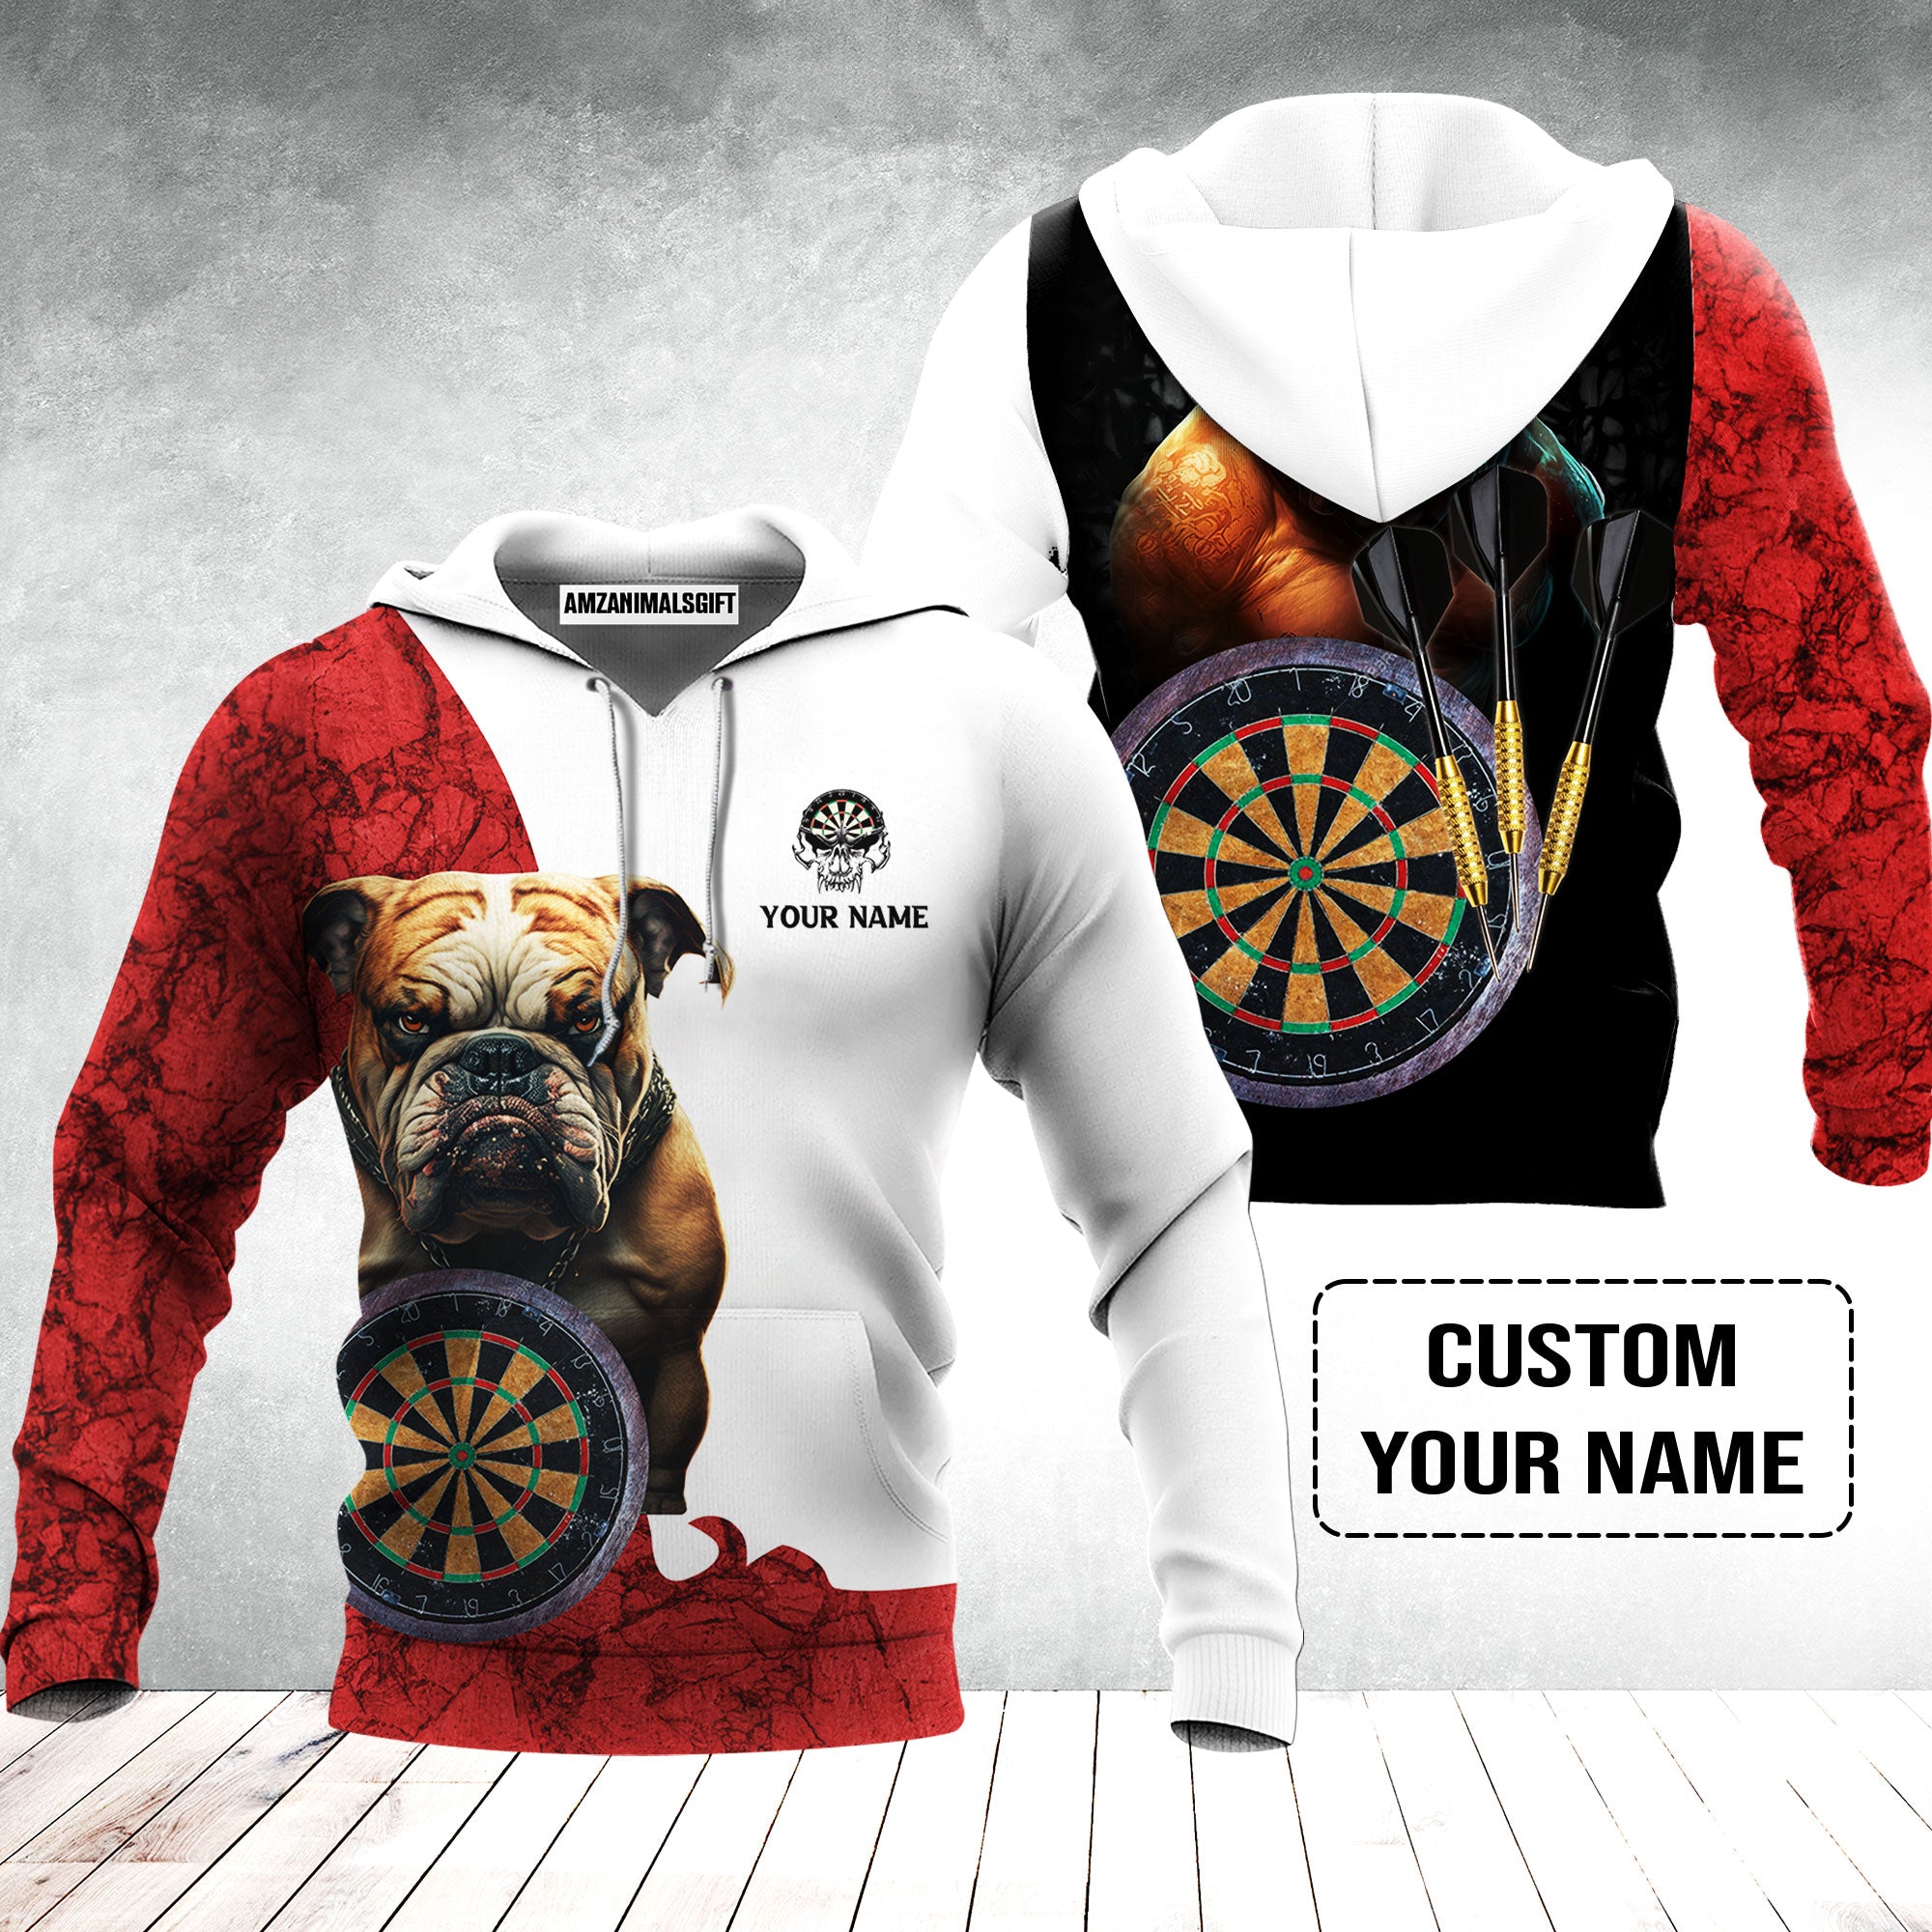 Bulldog And Darts Custom Name Hoodie, Bullseye Dartboard Personalized Hoodie - Gift For Darts Lovers, Friends, Team, Dog Lovers